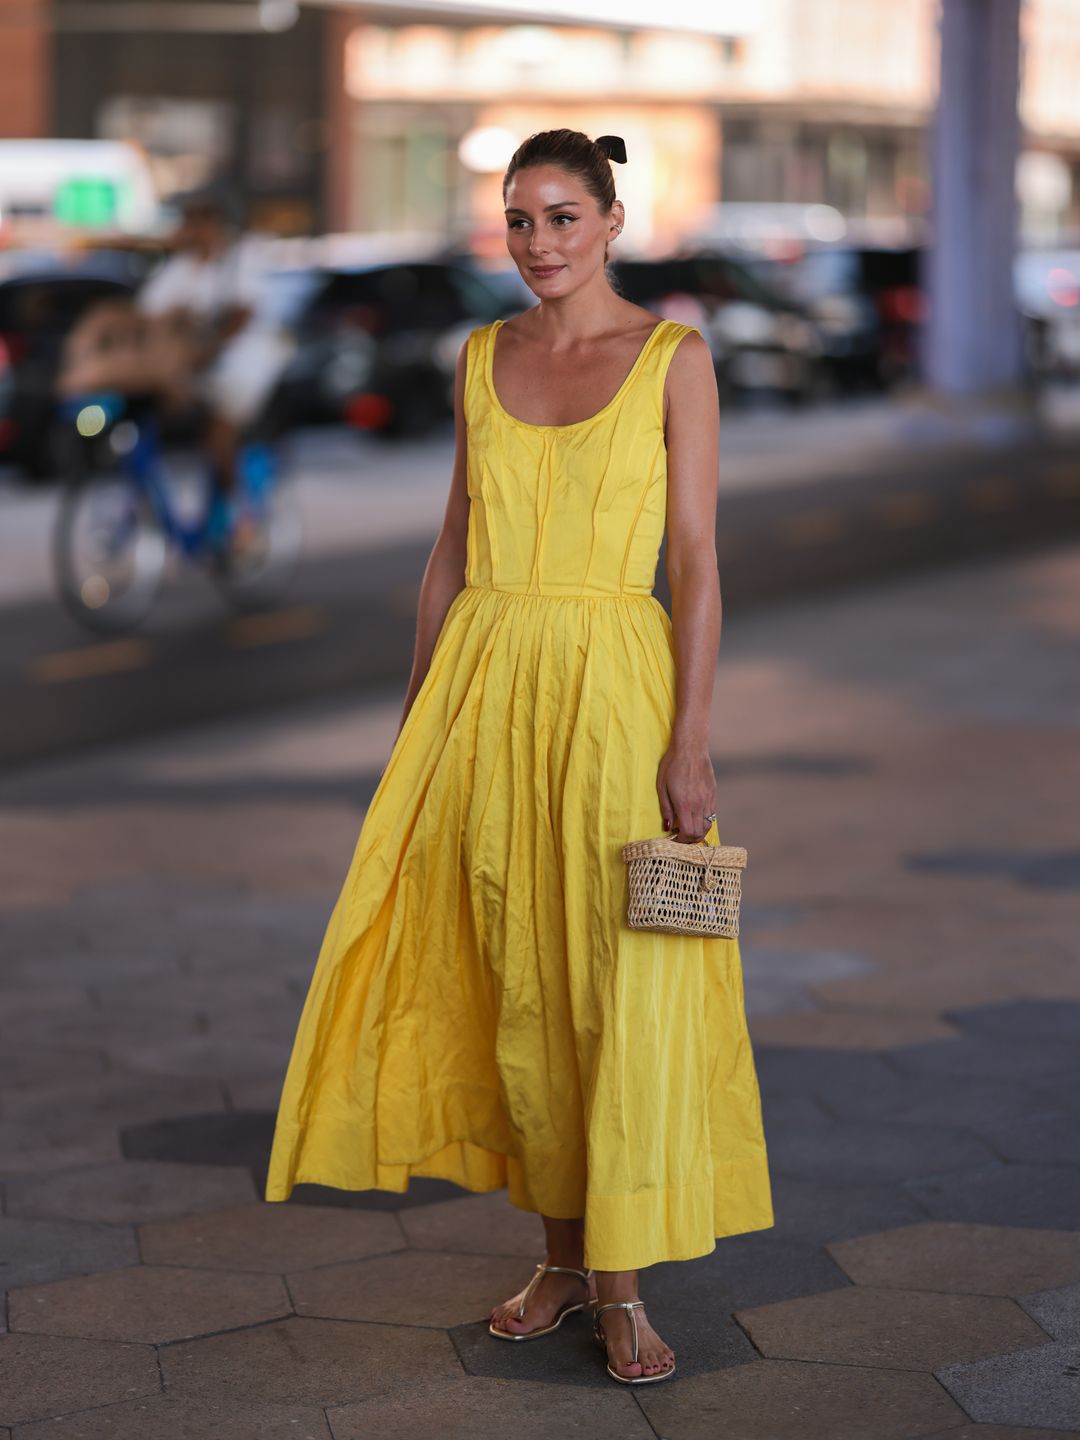 Olivia Palermo wearing a yellow dress holding a raffia bag 